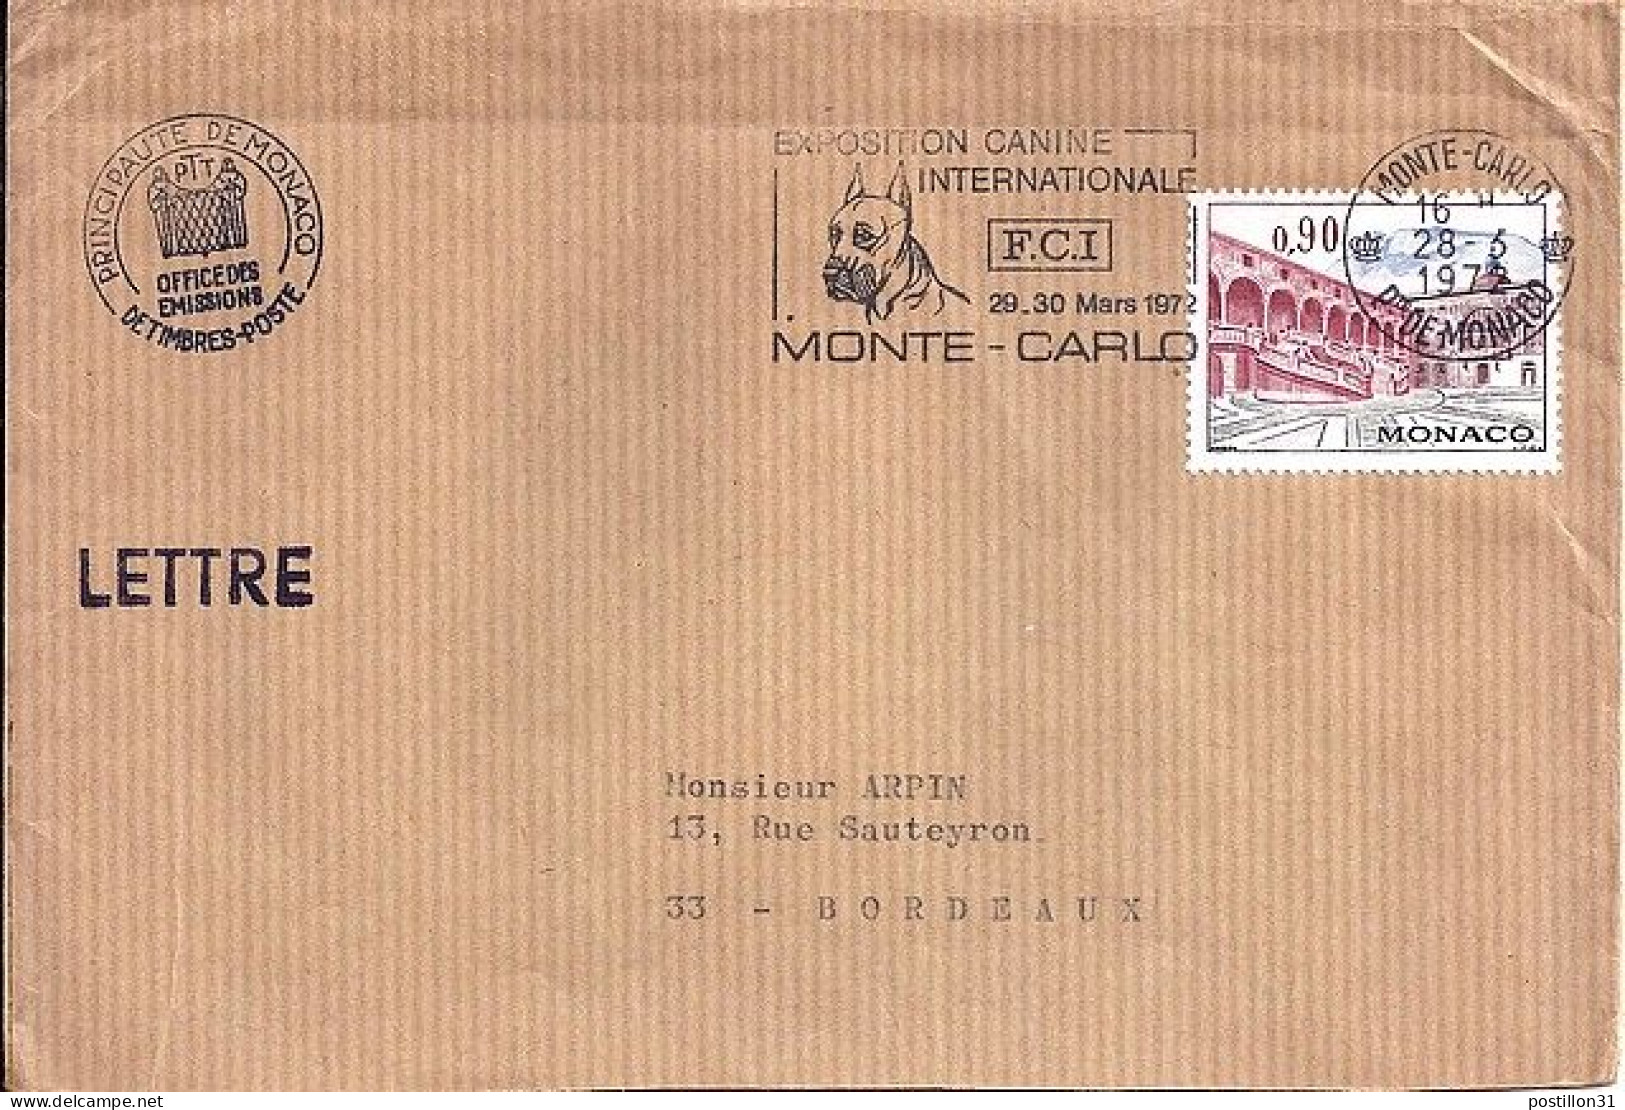 MONACO N° 848 S/L. DE MONTE CARLO/28.6.72  POUR FRANCE - Cartas & Documentos